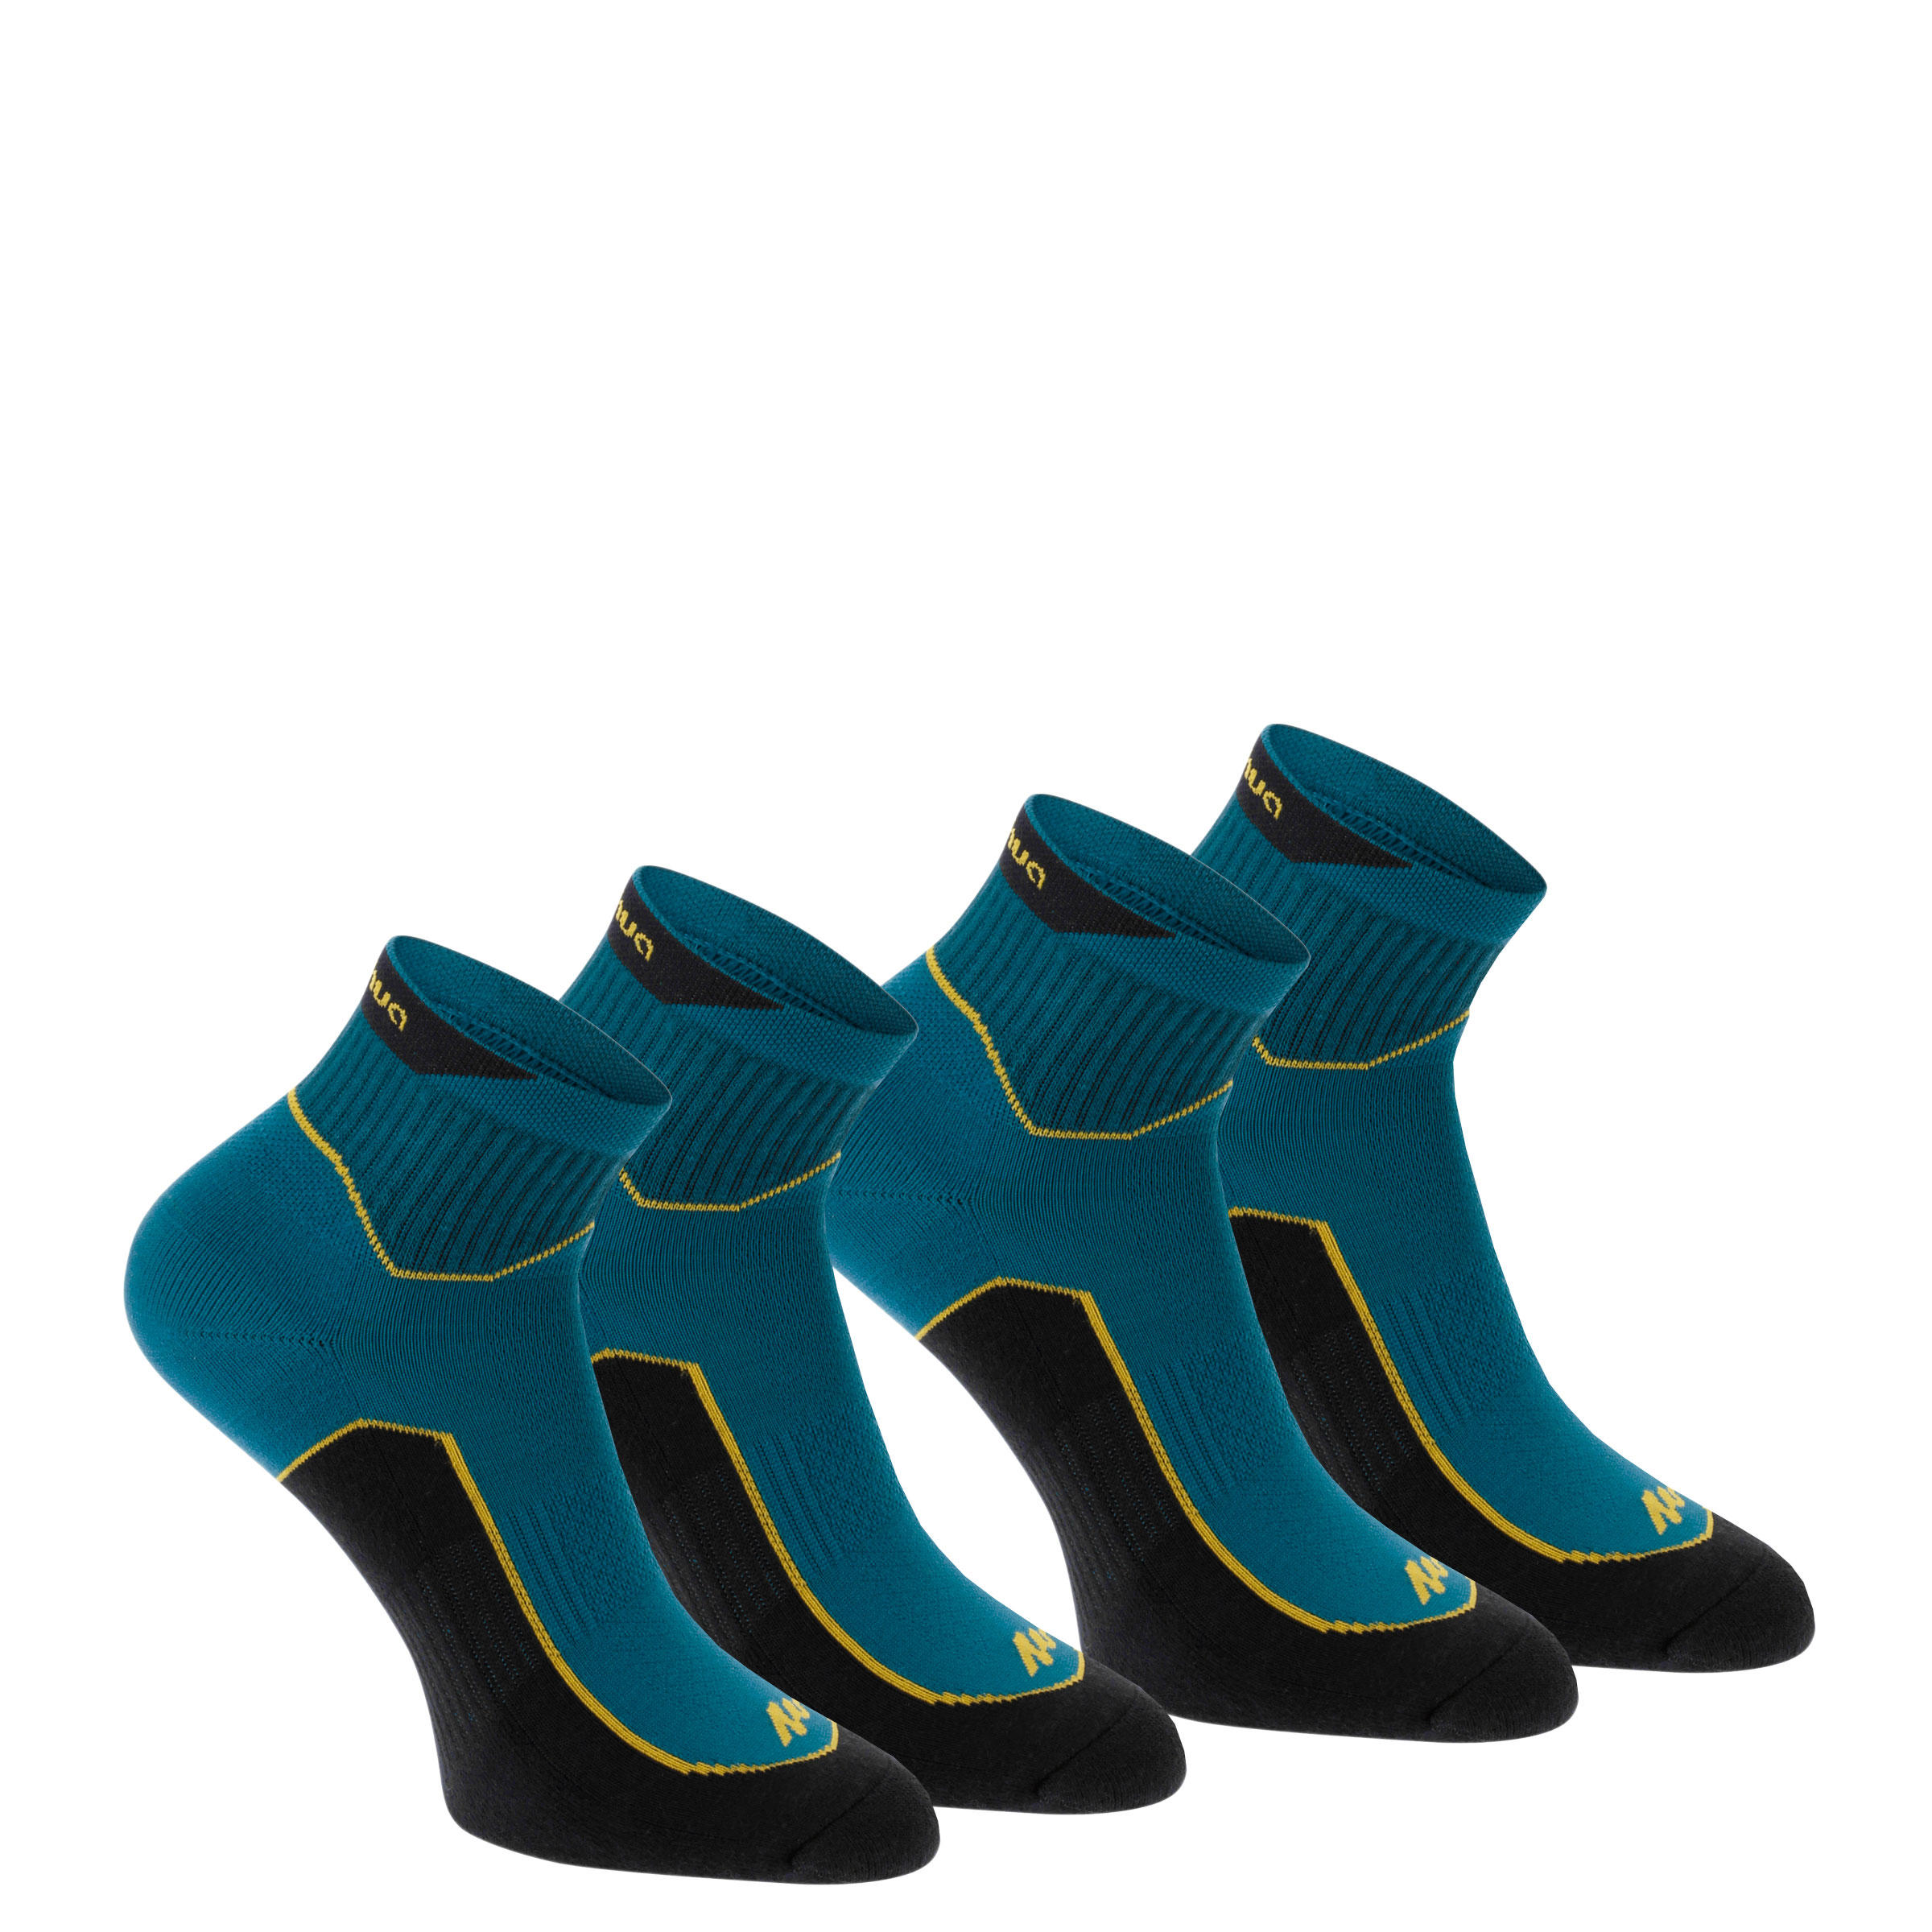 2 pairs of adult’s medium Arpenaz 100 hiking socks - Blue 1/7